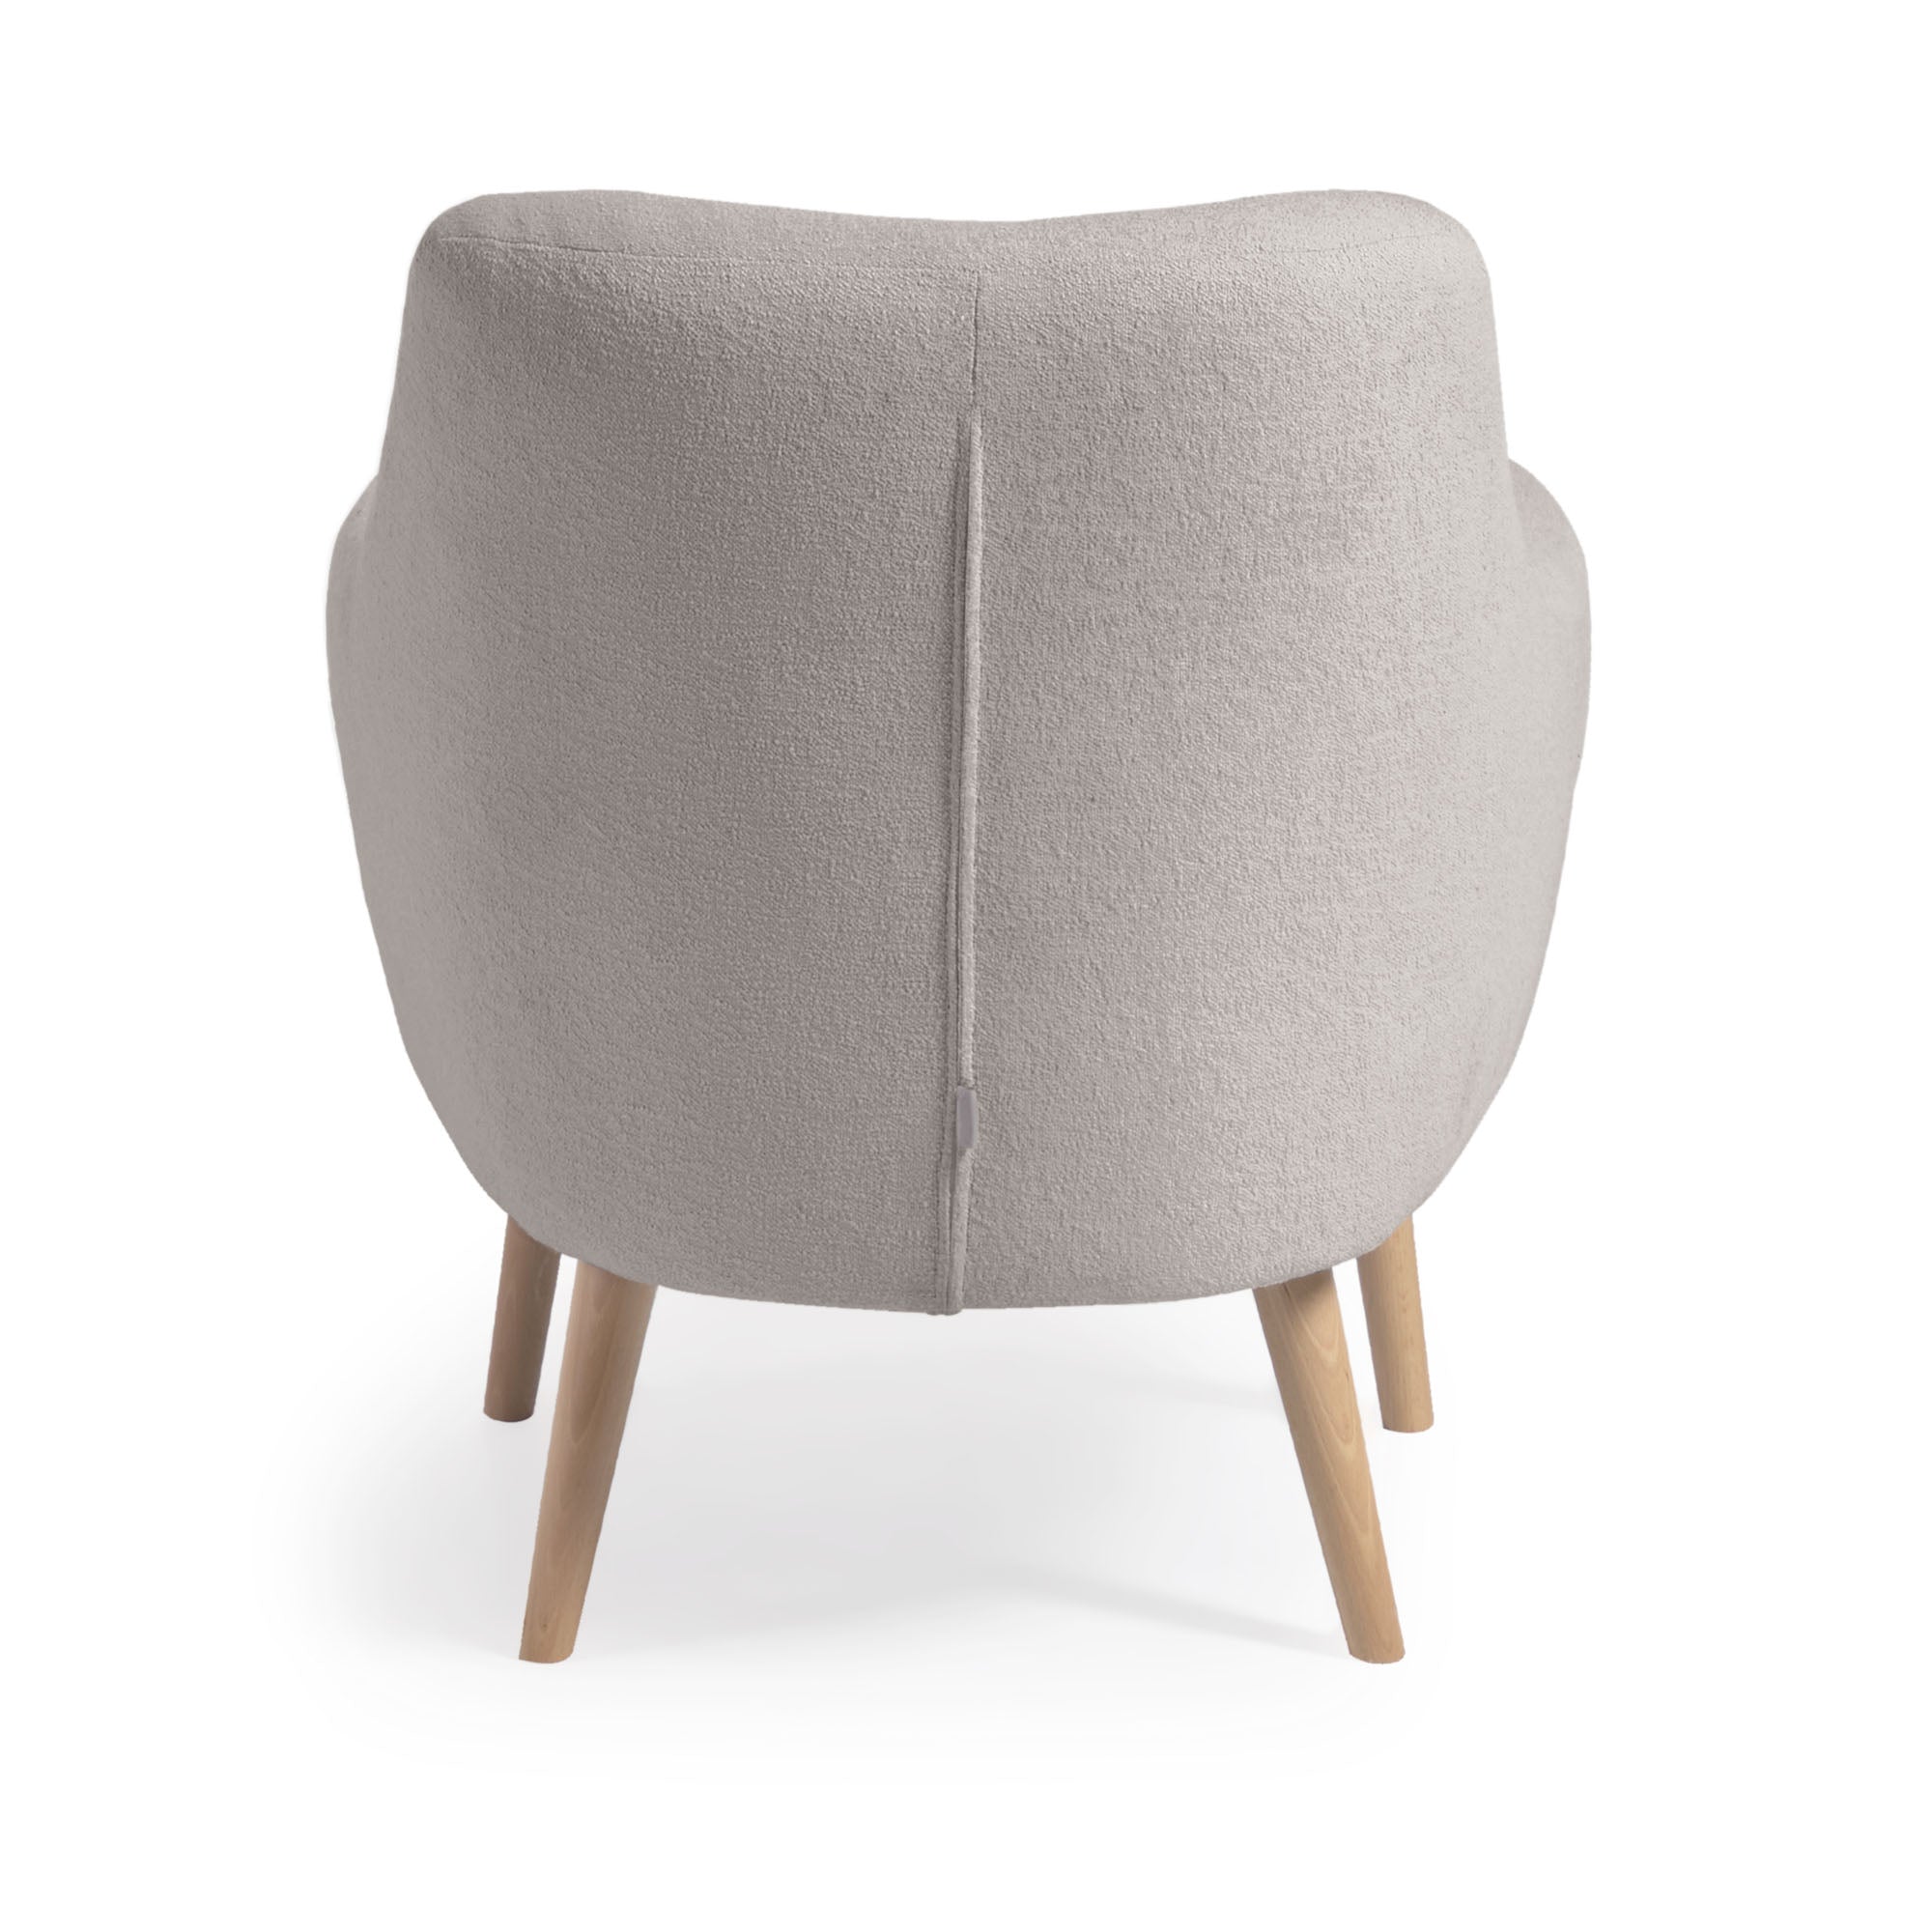 Candela armchair in grey fleece